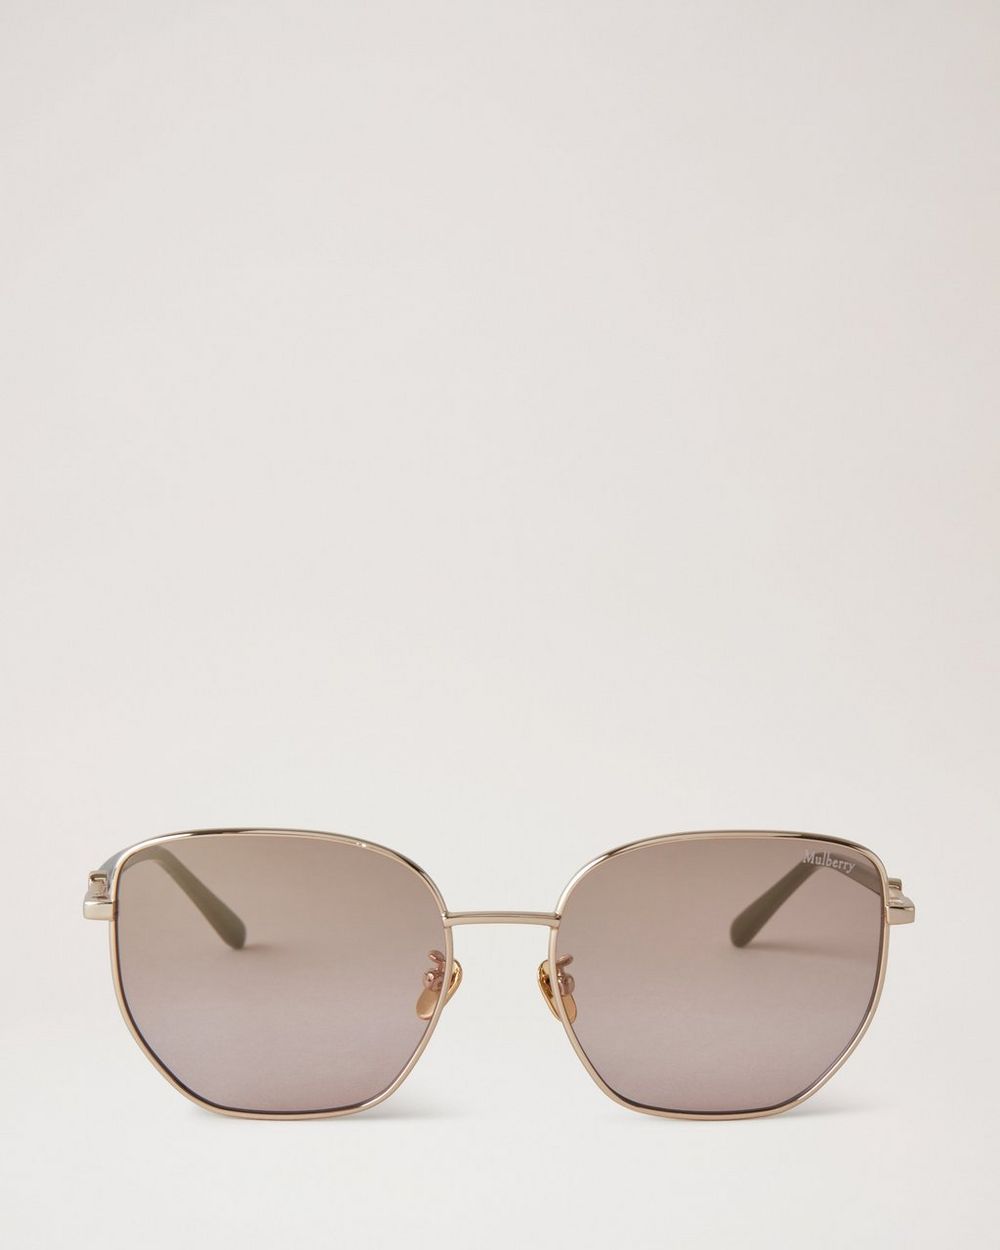 Louis Vuitton LV Monogram Pearl Square Sunglasses Black Acetate & Metal. Size W